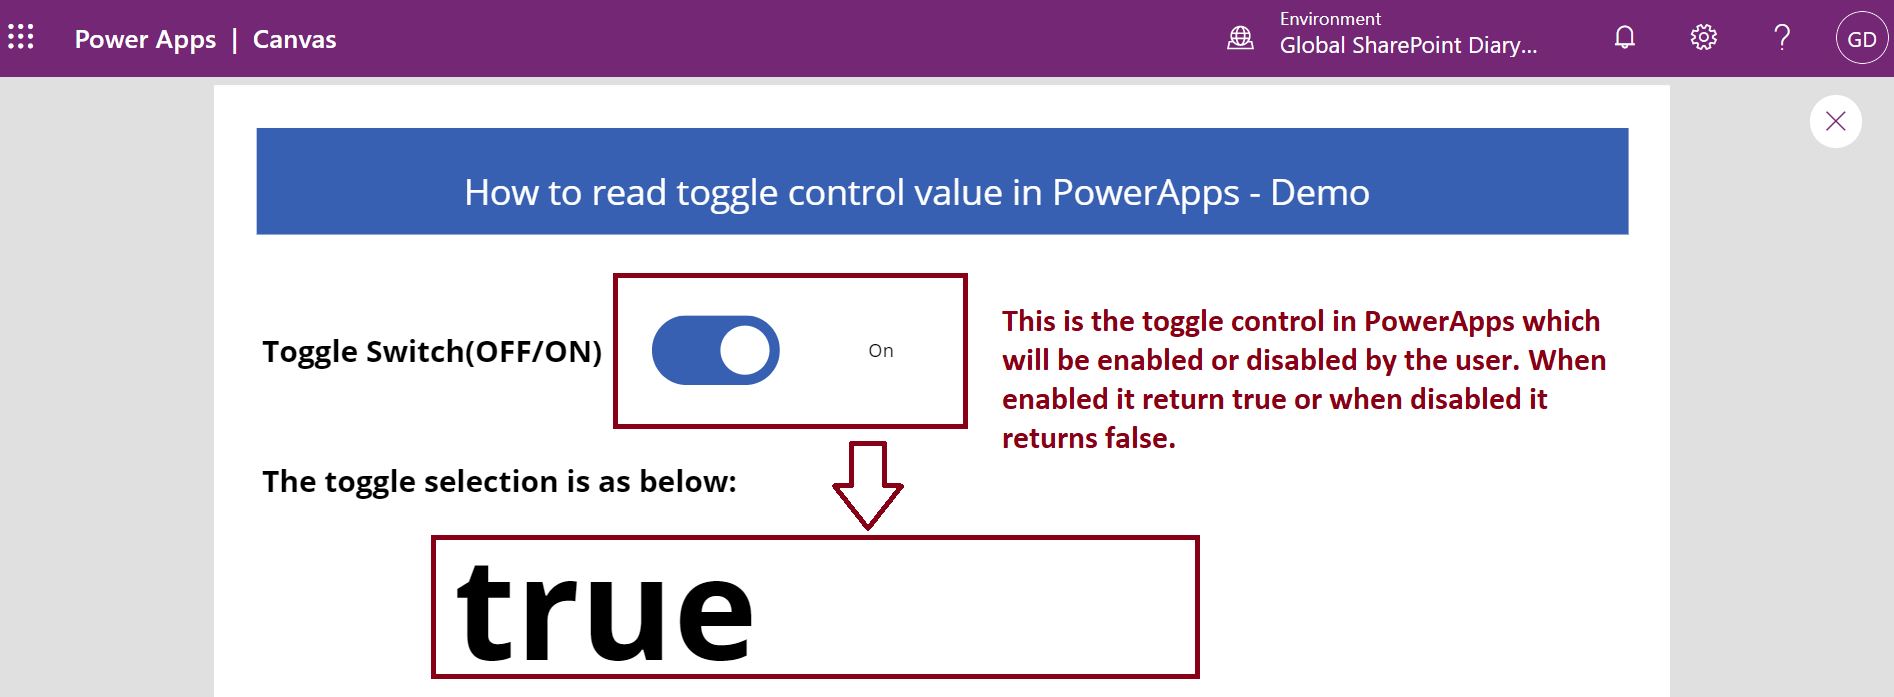 PowerApps Toggle control - demo